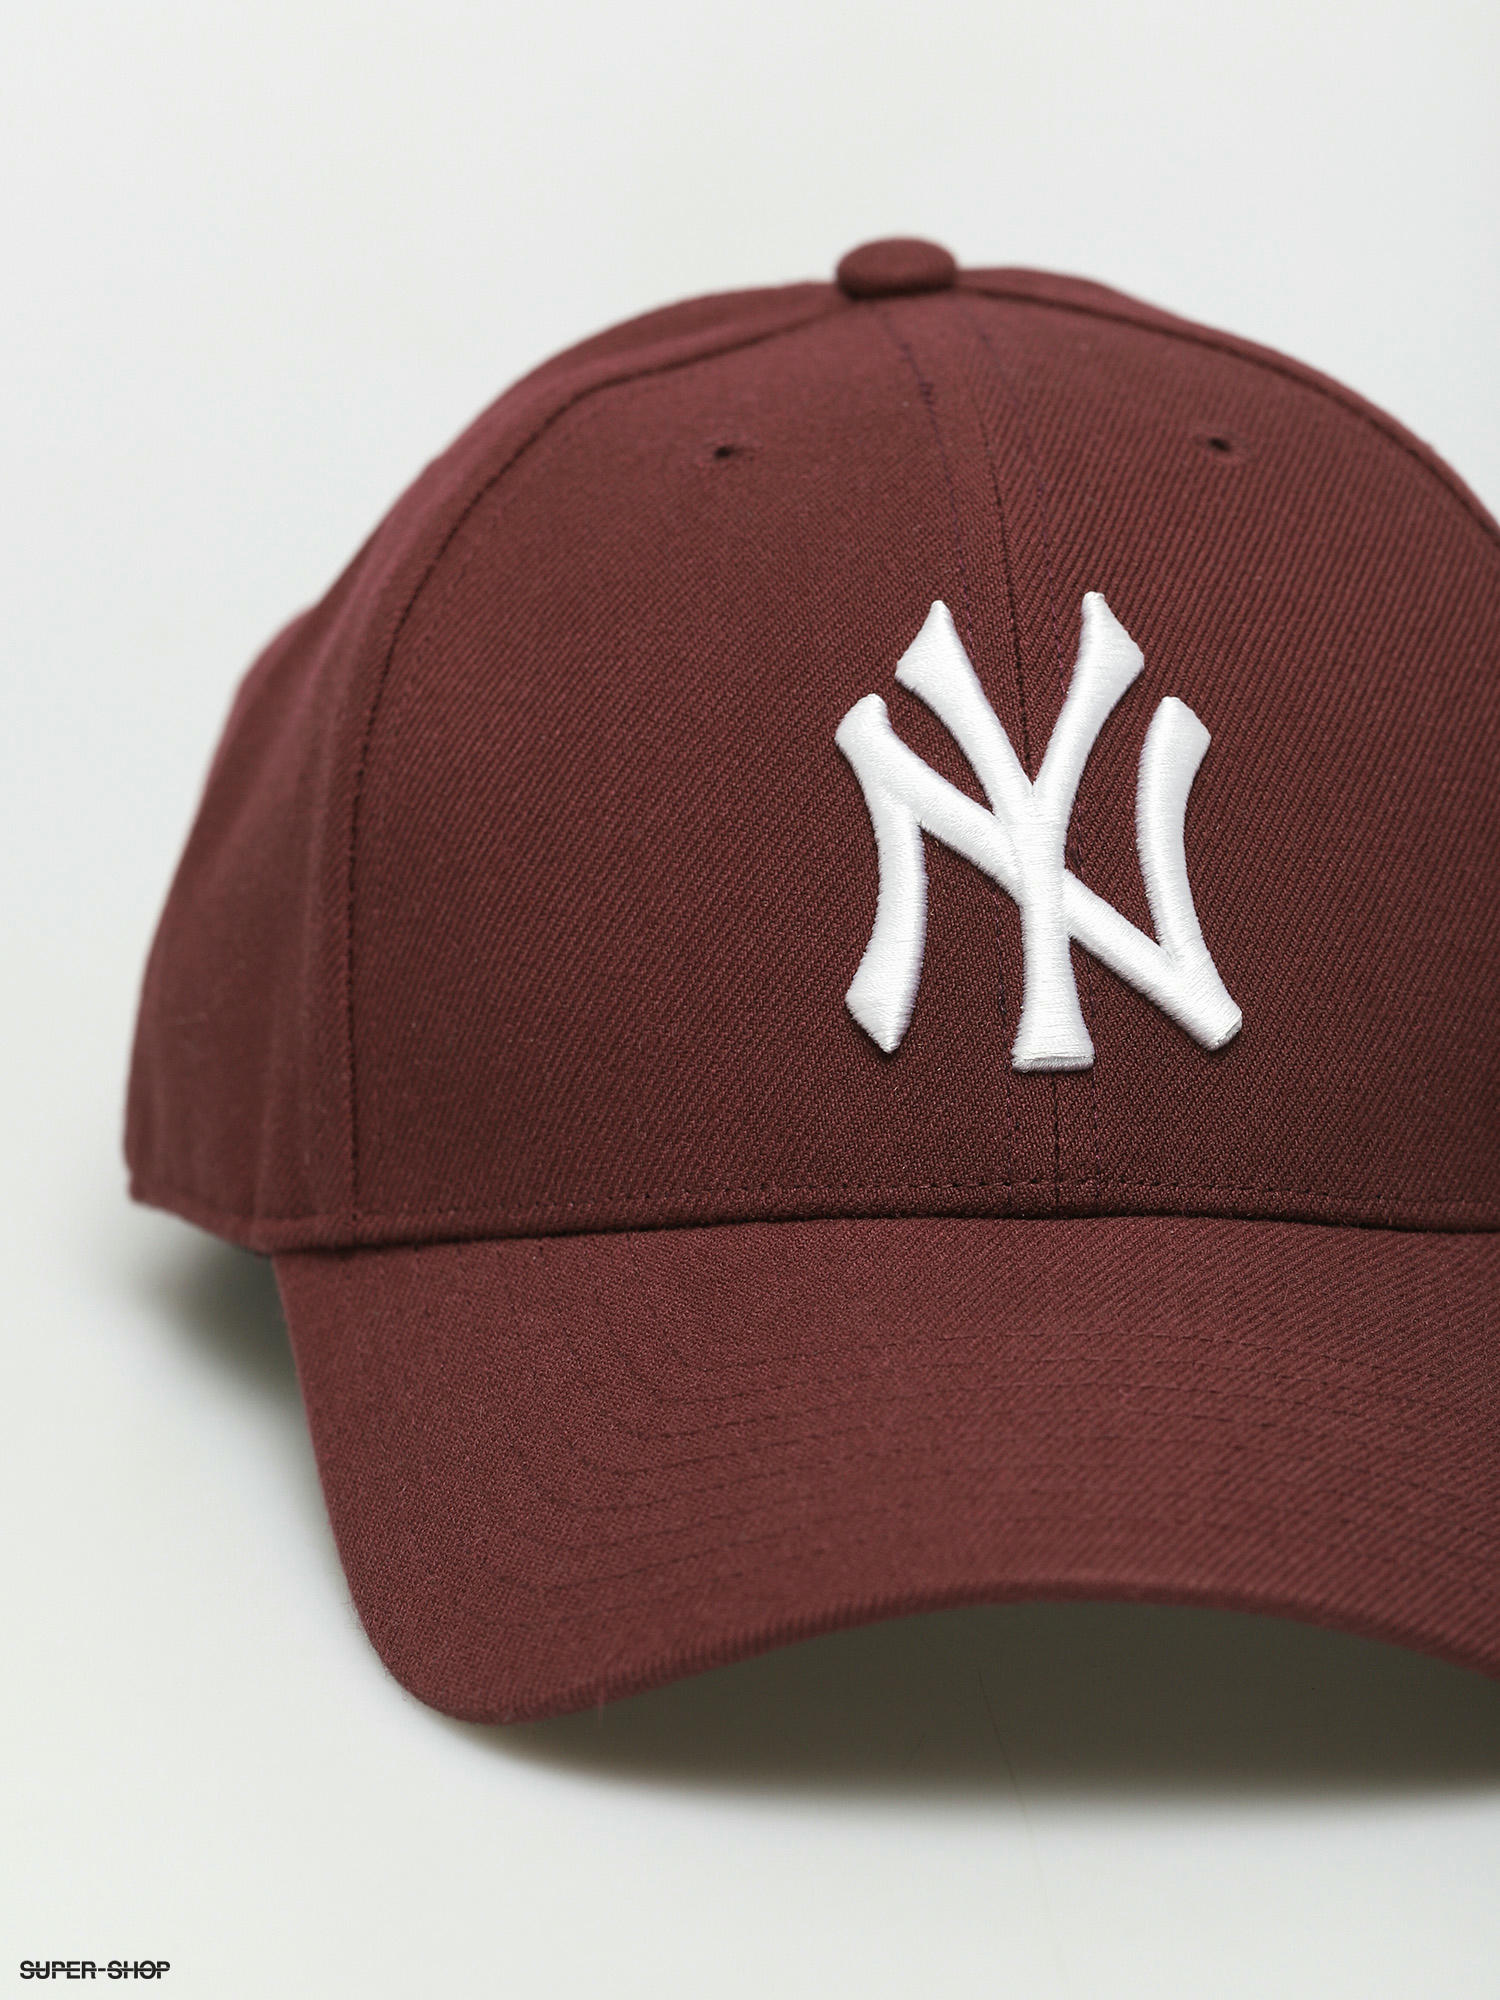 47 Brand New York Yankees MVP Cap Dark Maroon 